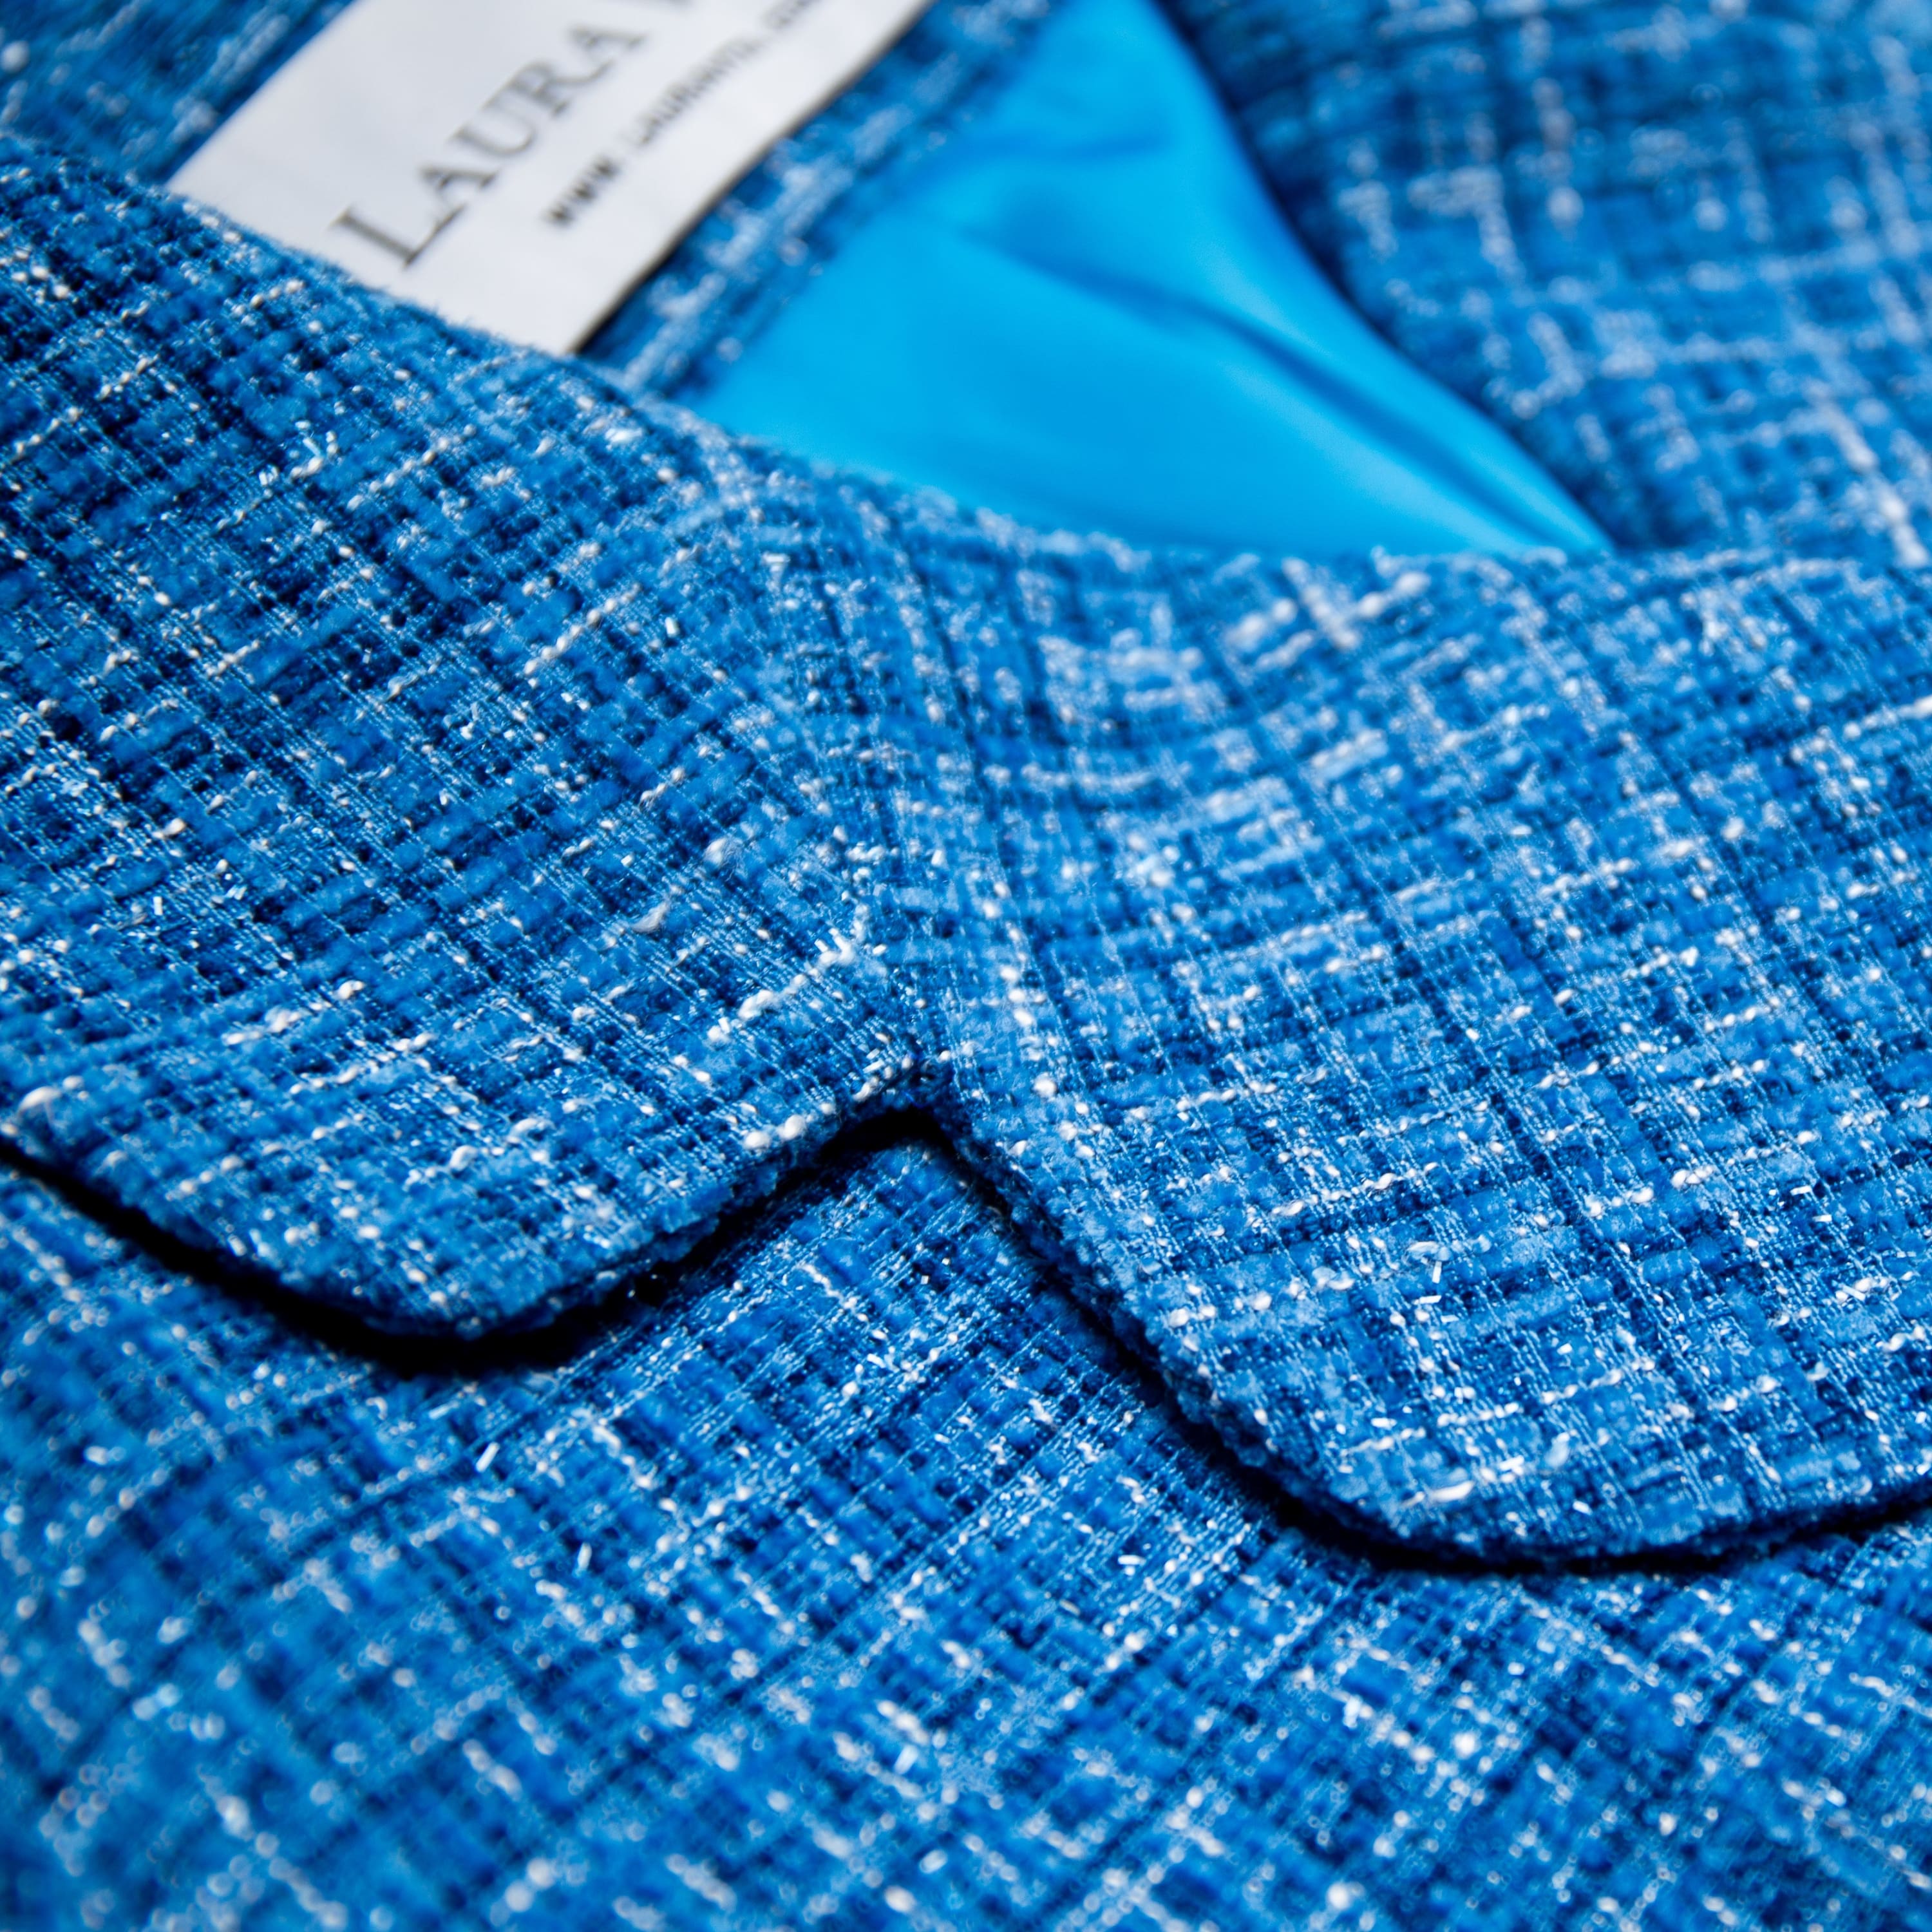 Giacca blu Typhoon Studio - Cappotti e giacche